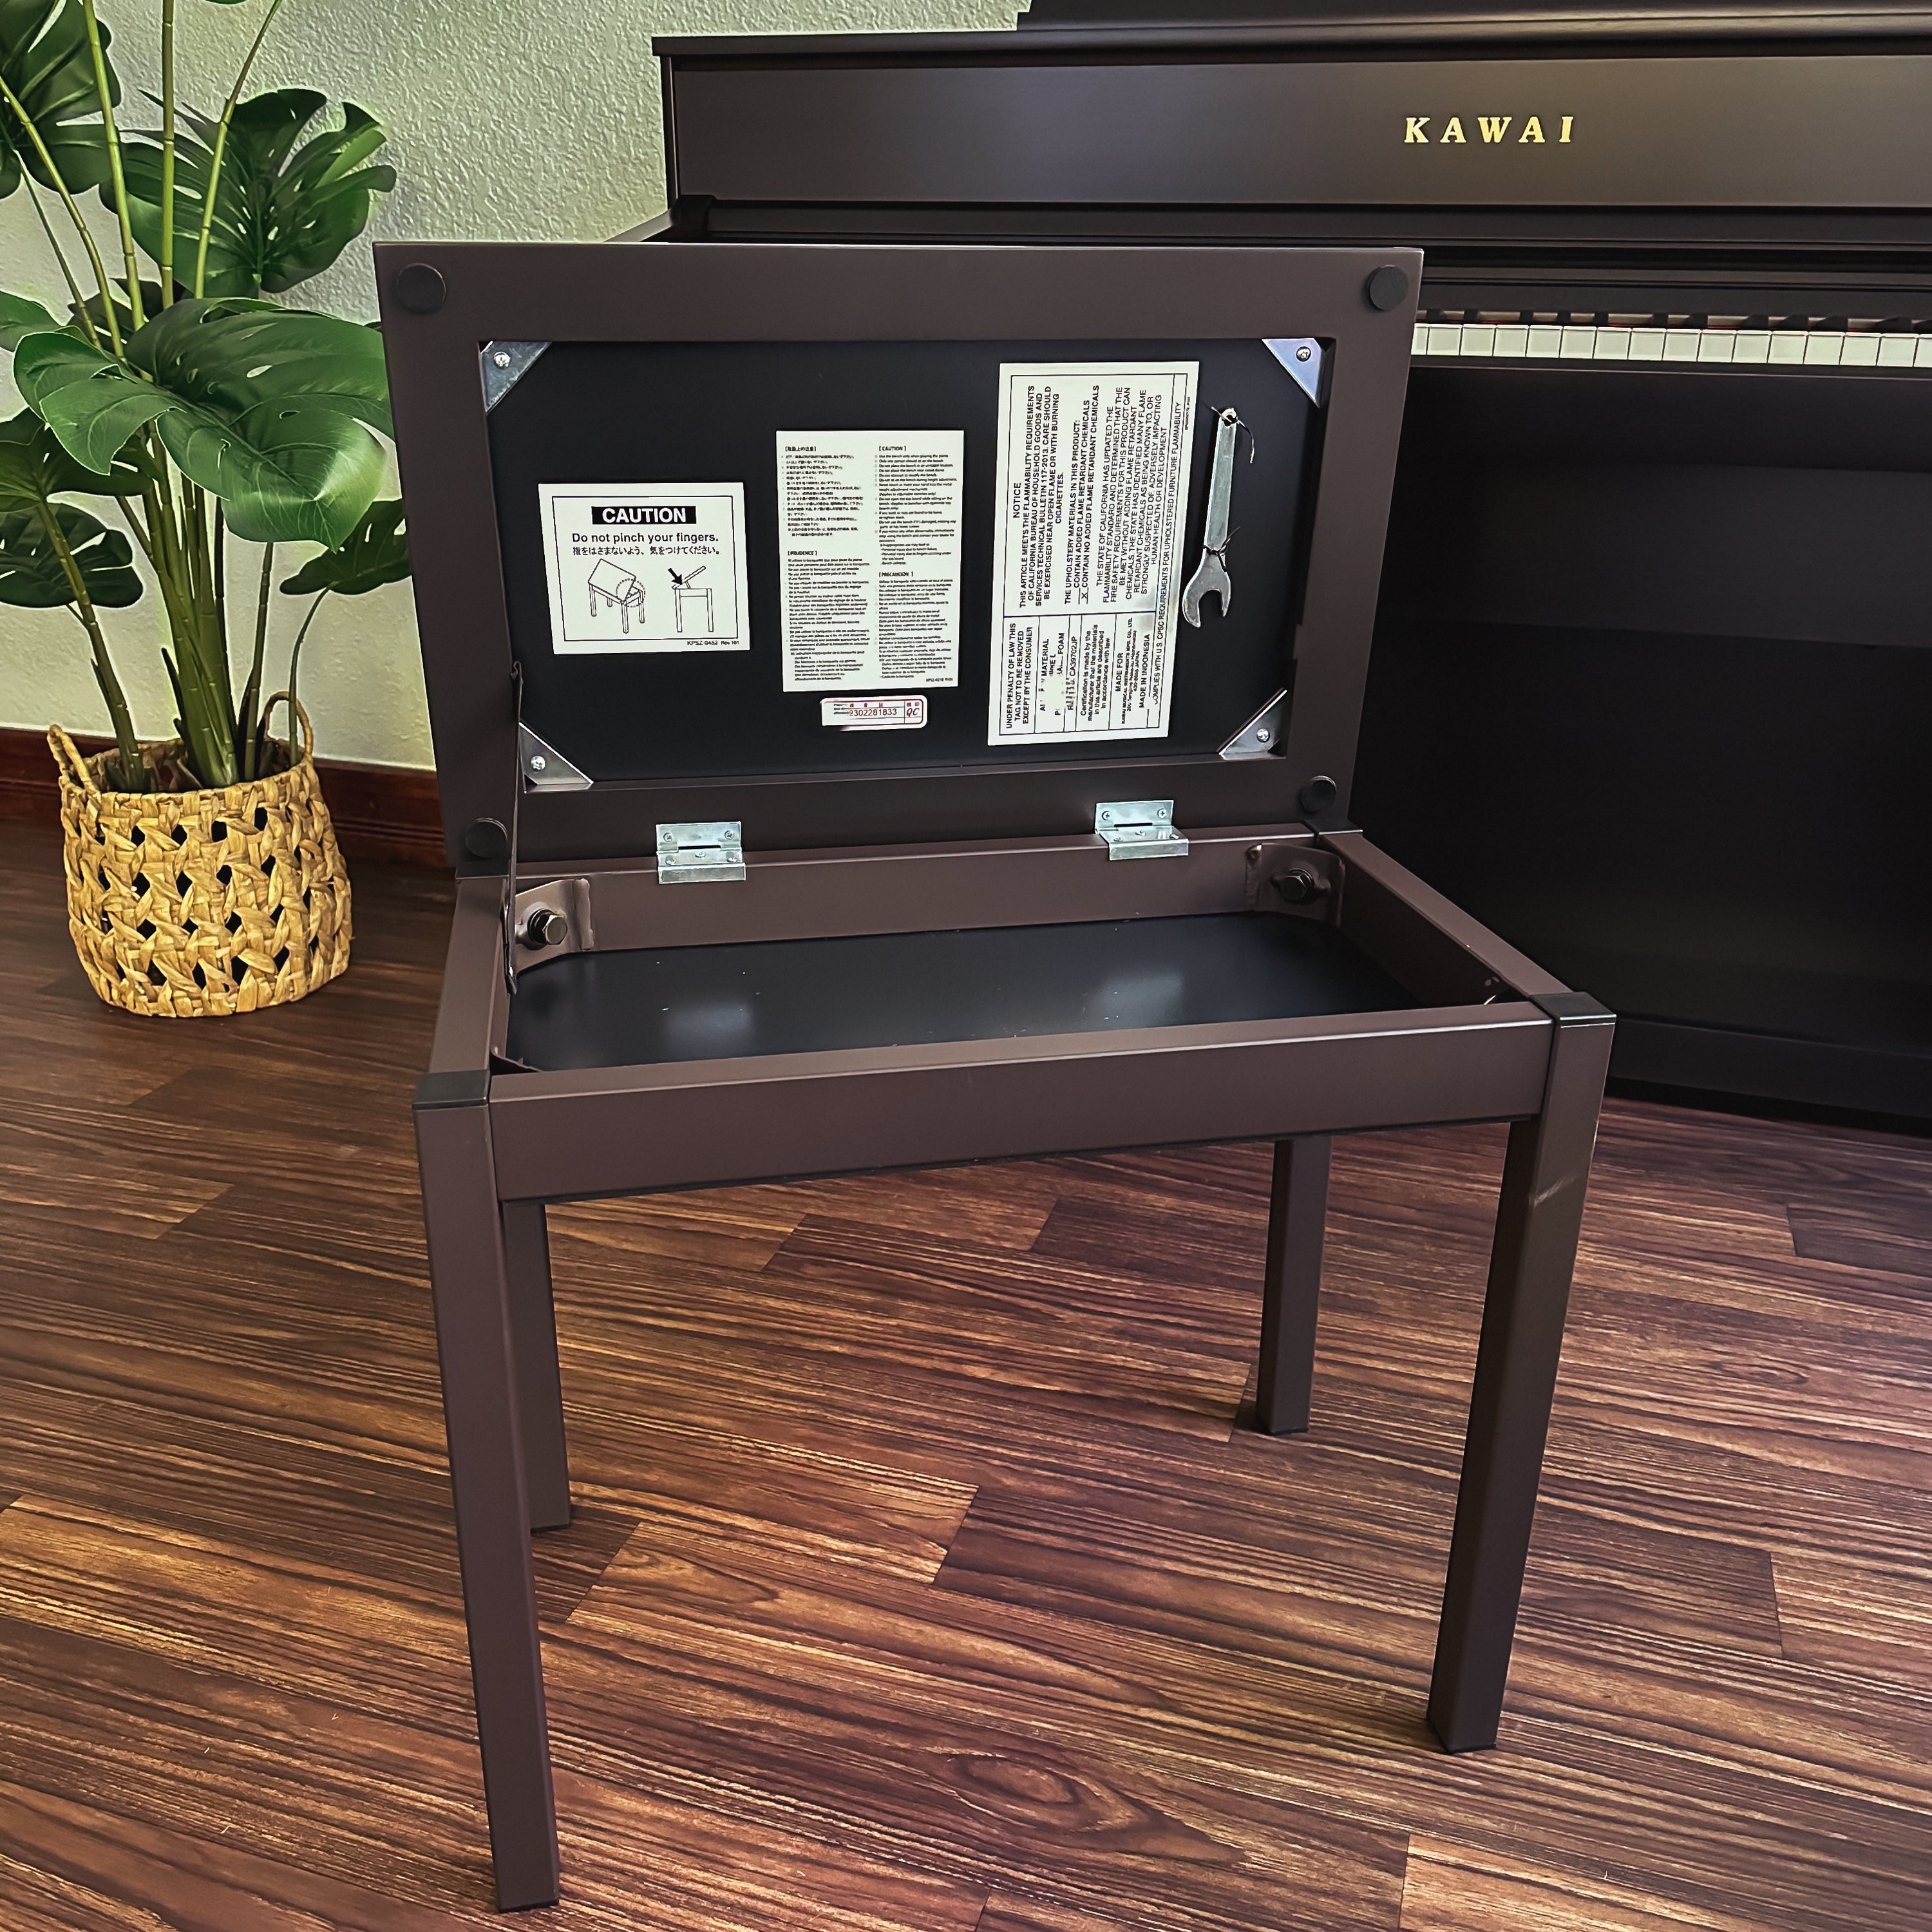 Kawai CA701 Digital Piano - Rosewood - bench open